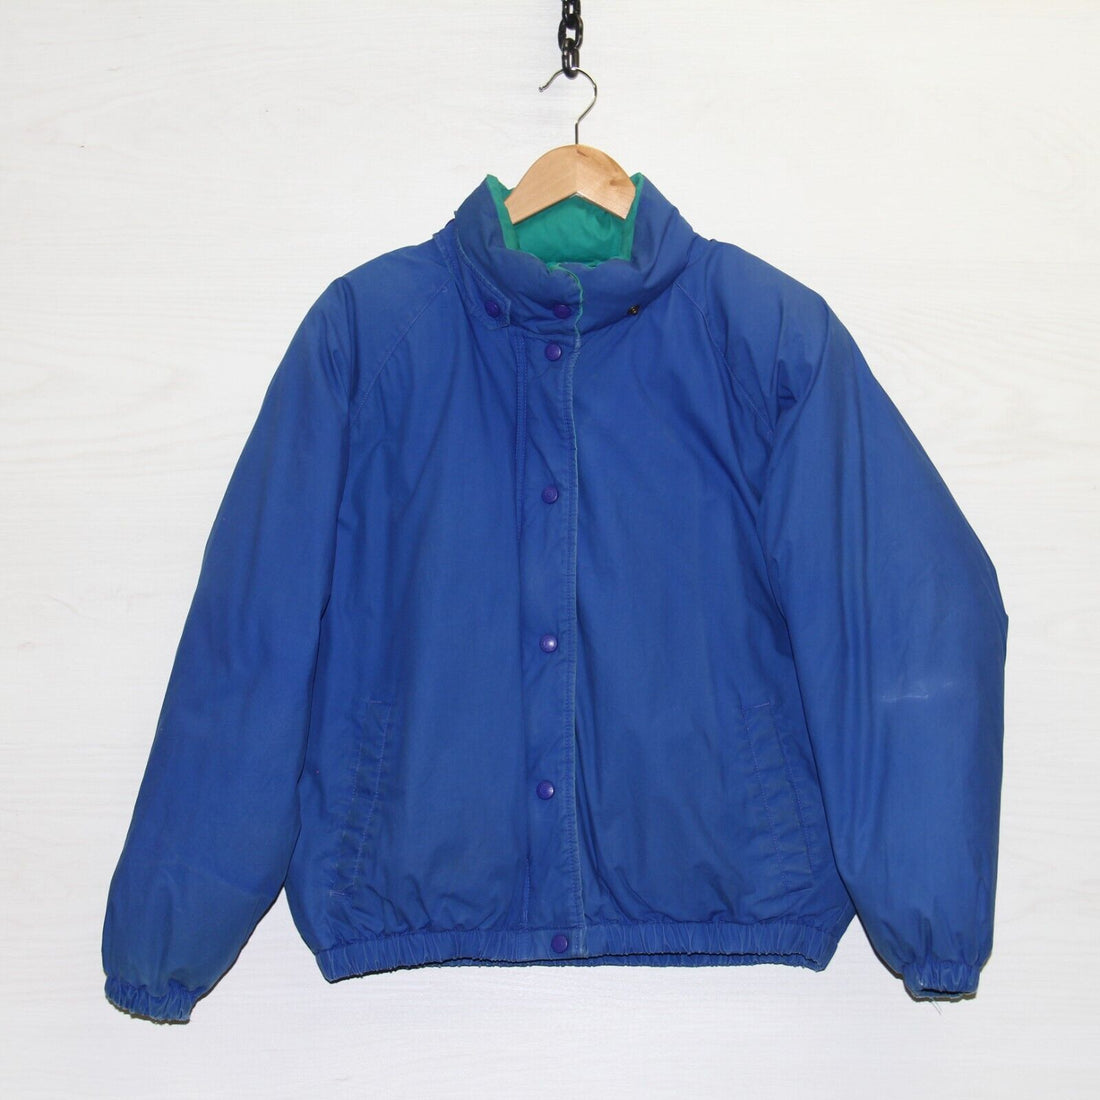 Vintage Eddie Bauer Bomber Jacket Size Large Blue Down Insulated